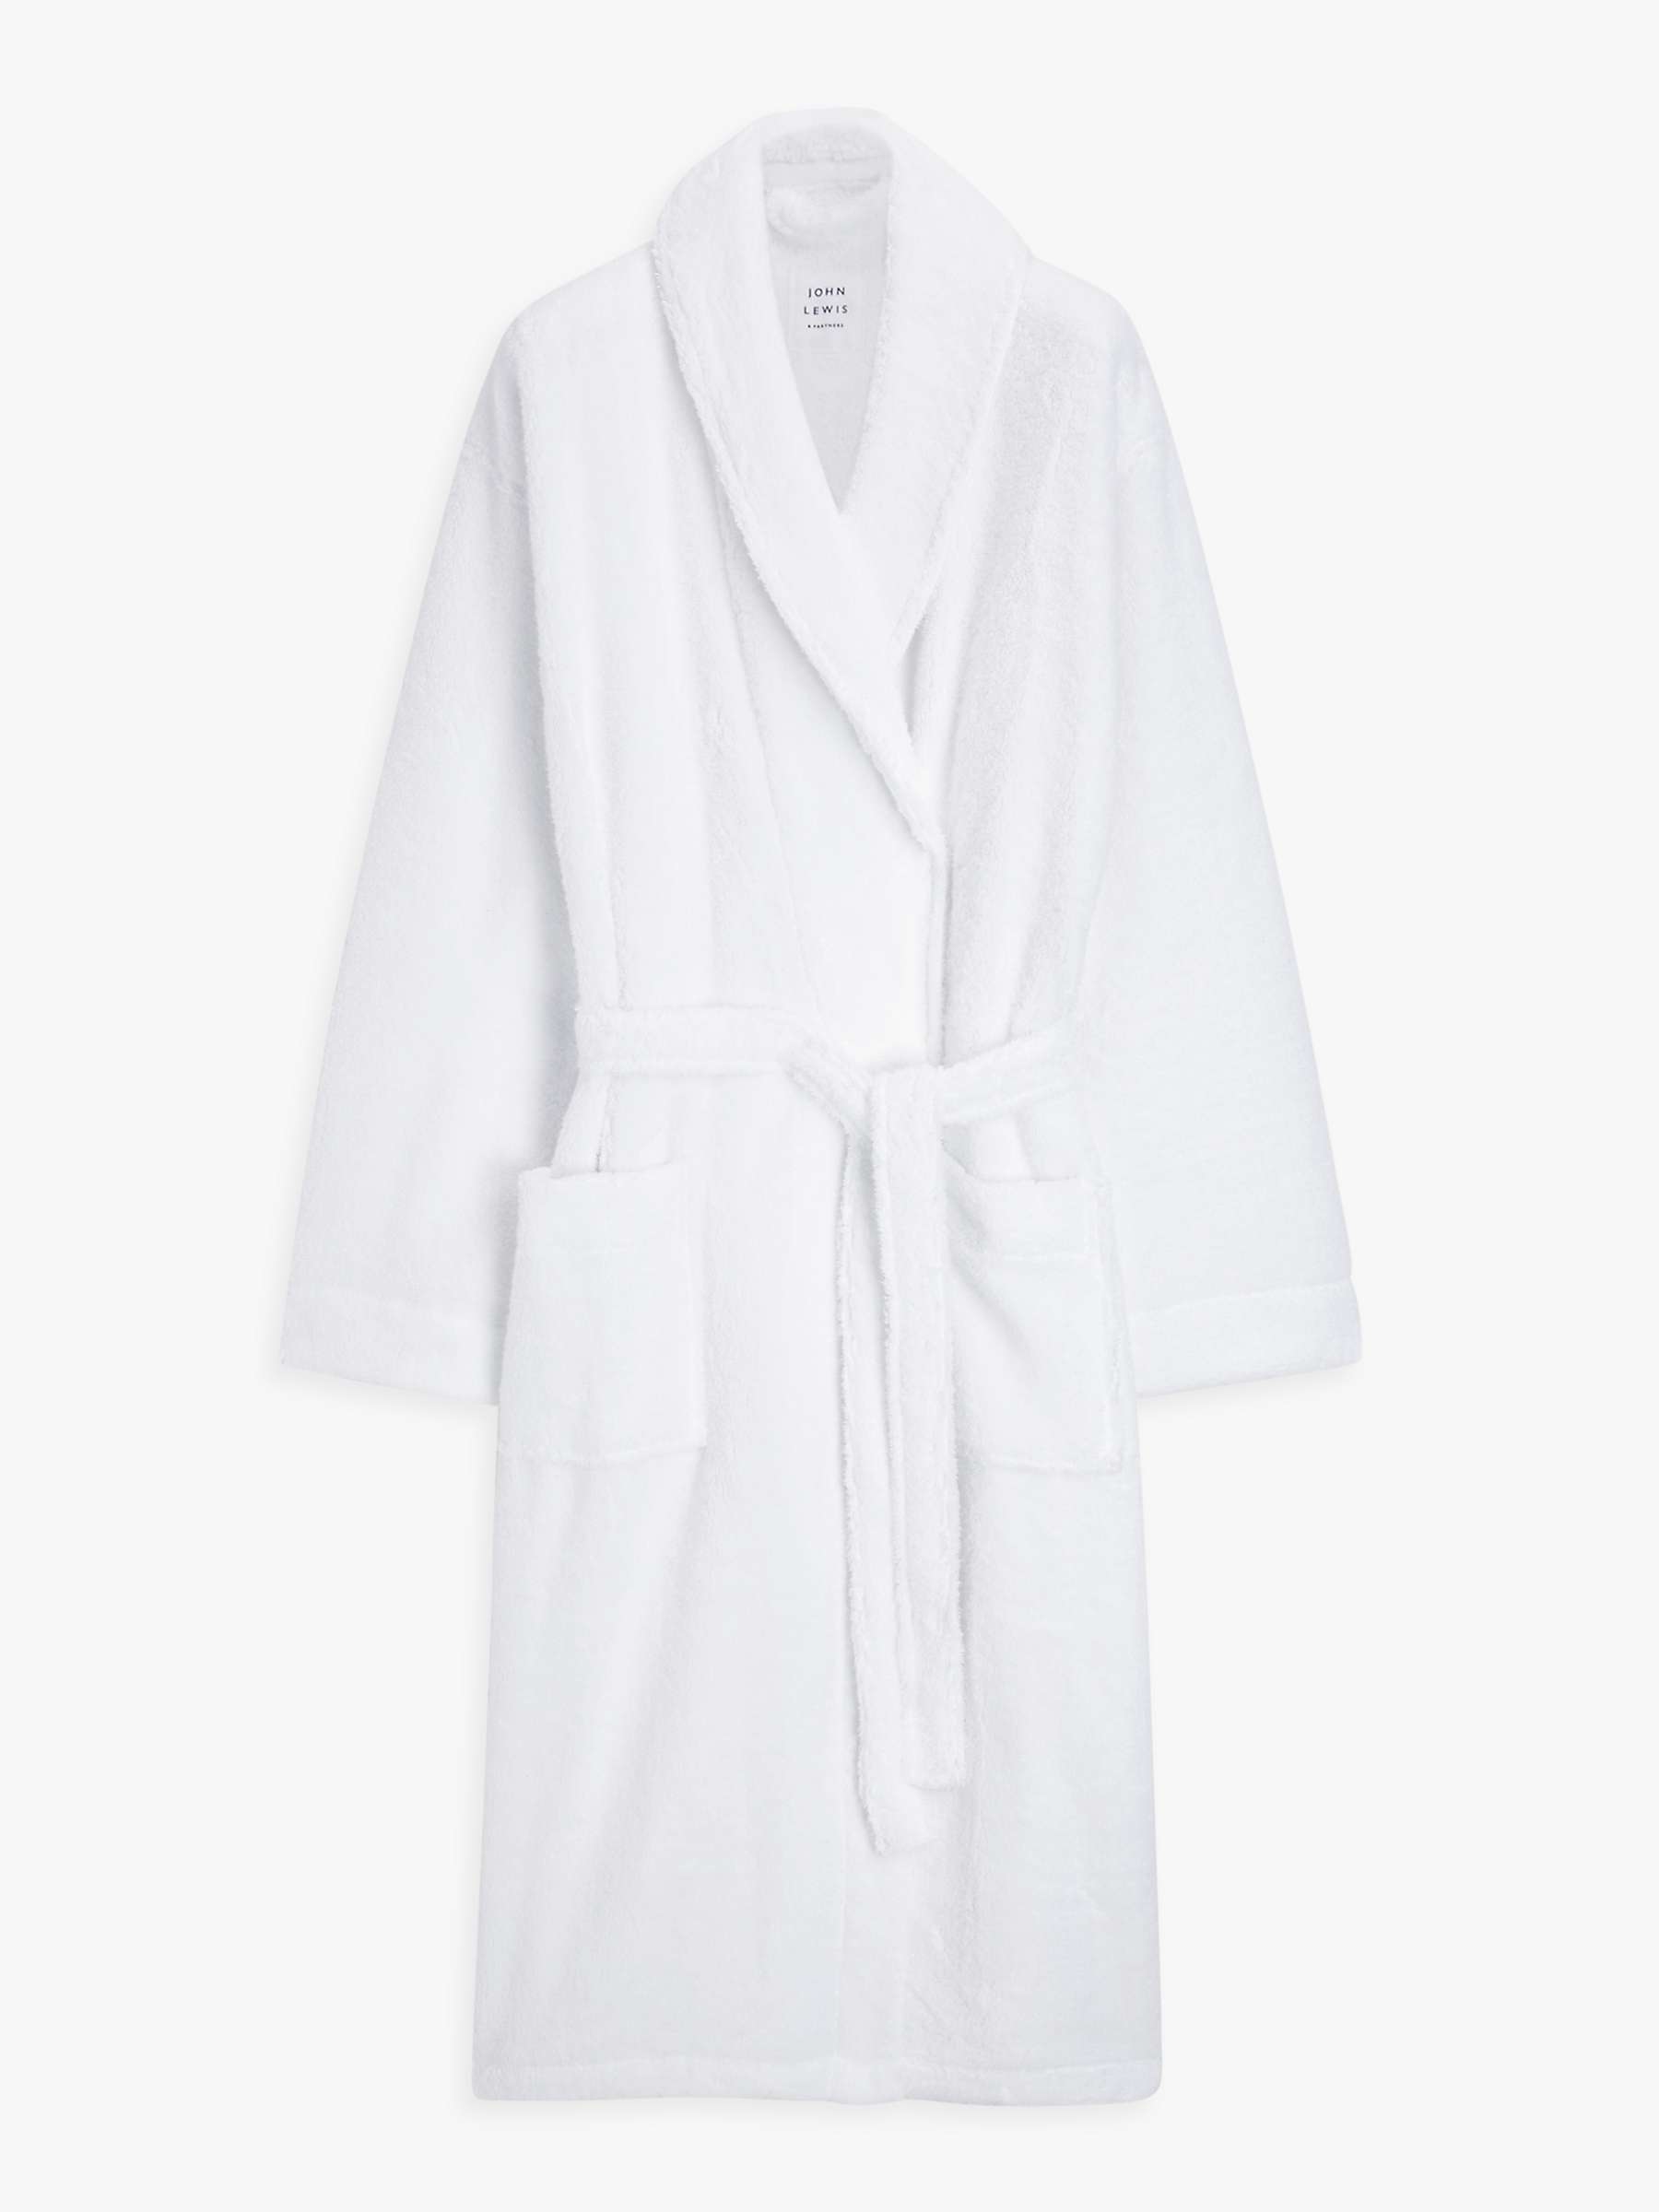 John Lewis Premium Luxury Towelling Robe, White at John Lewis & Partners